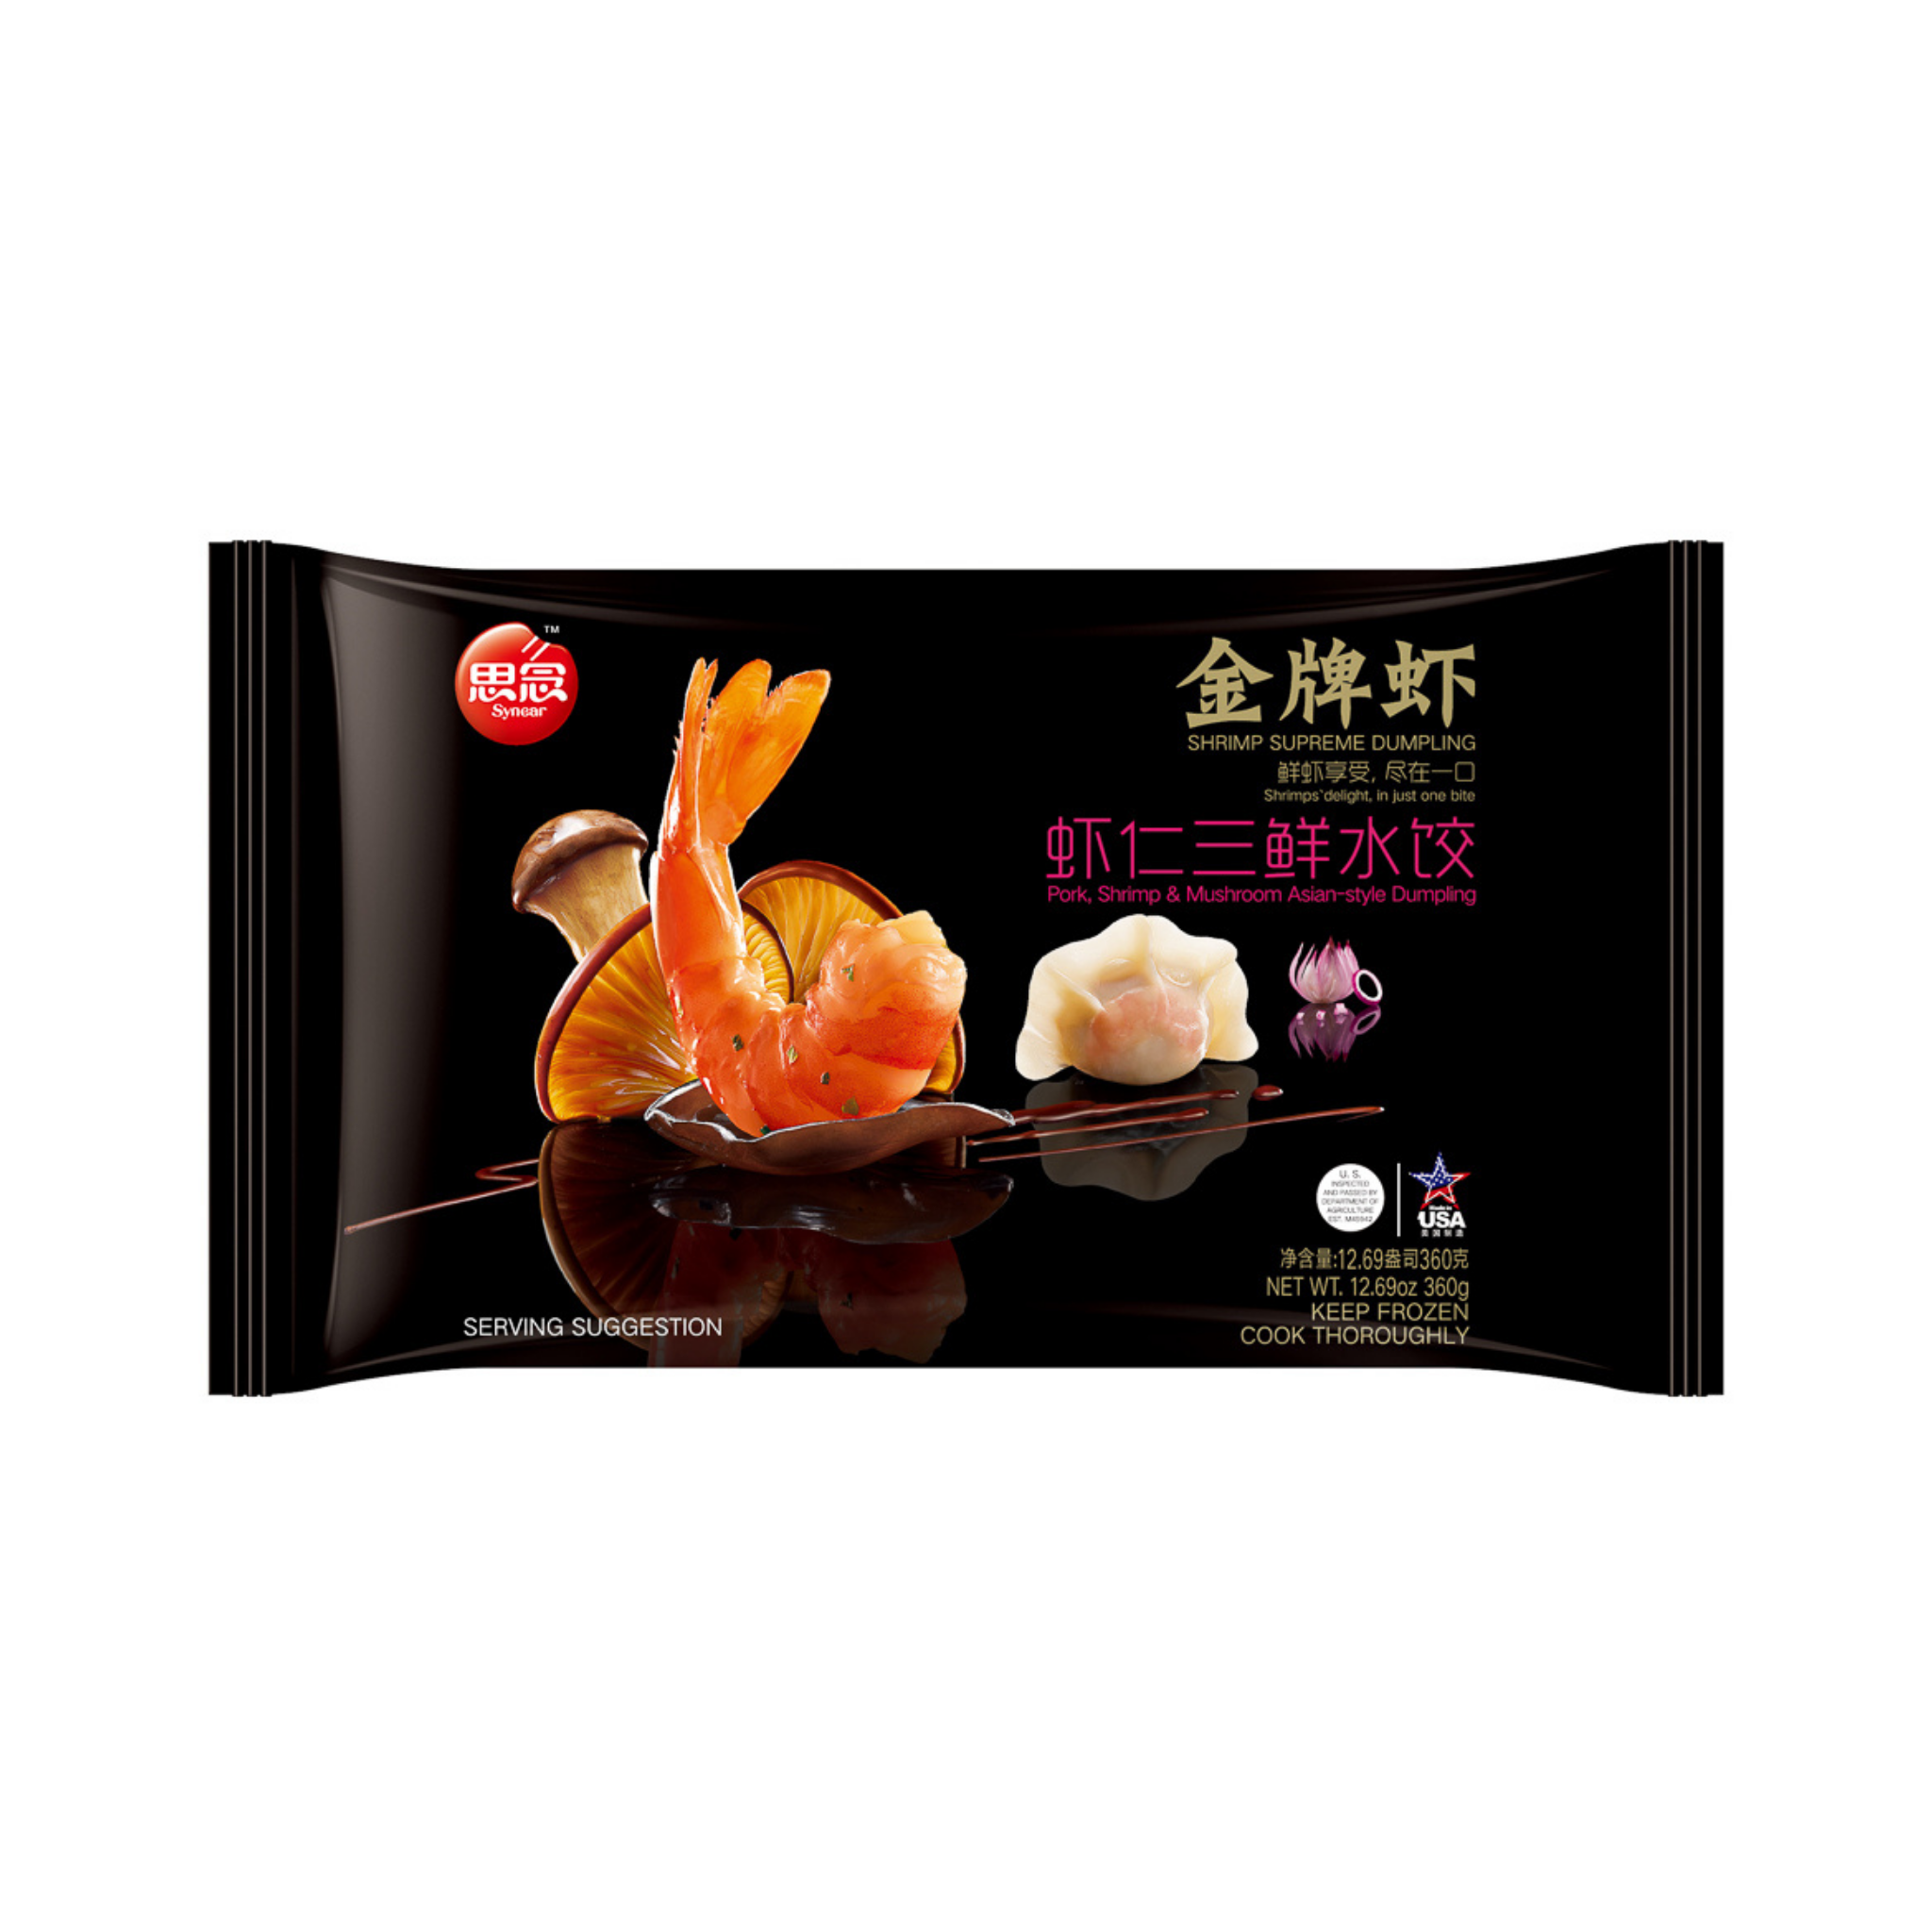 Shrimp, Pork & Mushroom Asian-style Dumpling 金牌虾虾仁三鲜水饺